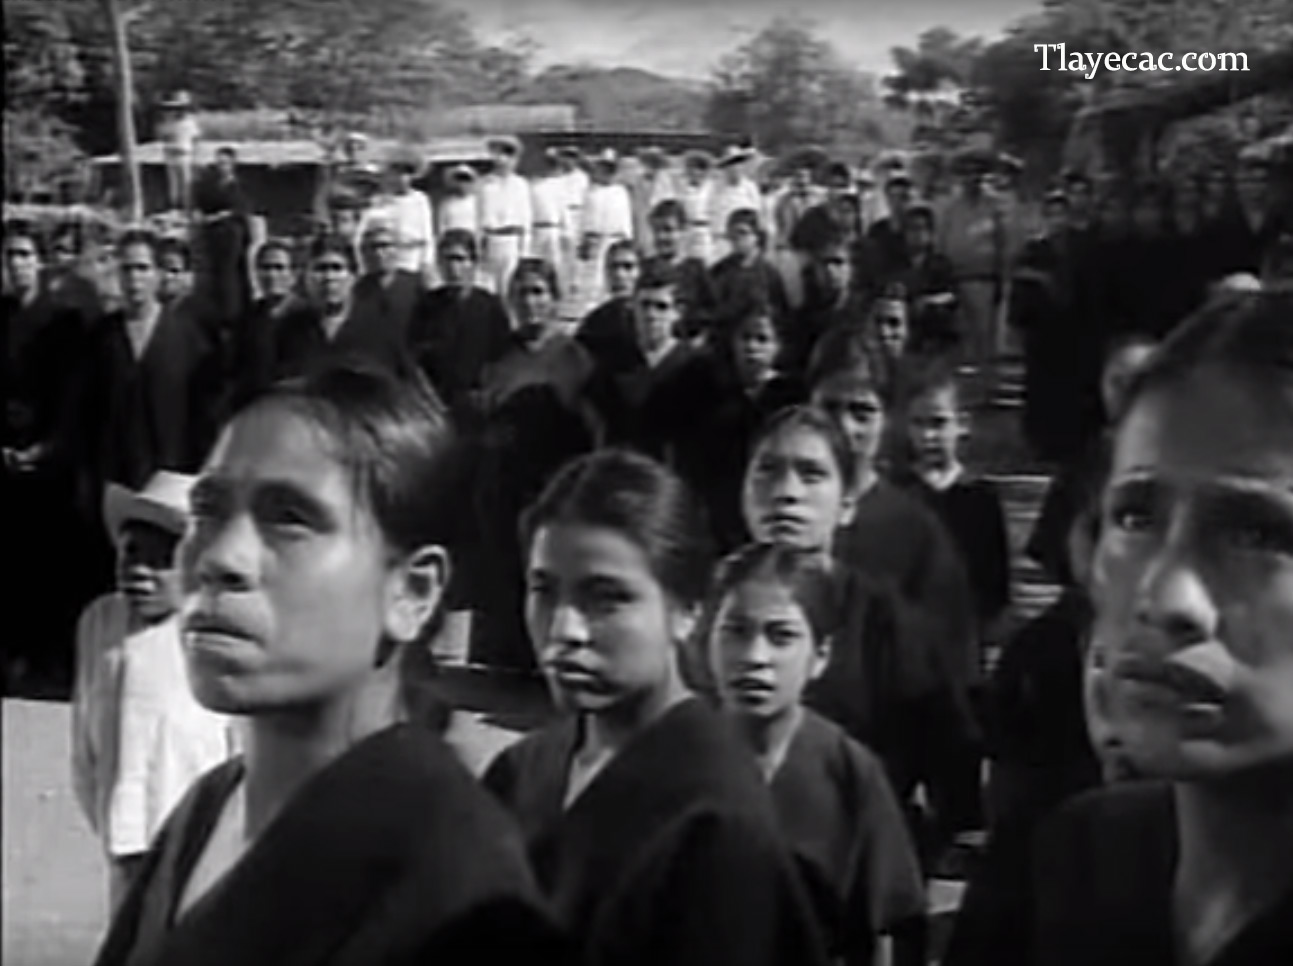 "Pueblito" film made in Tlayecac - Tlayecac